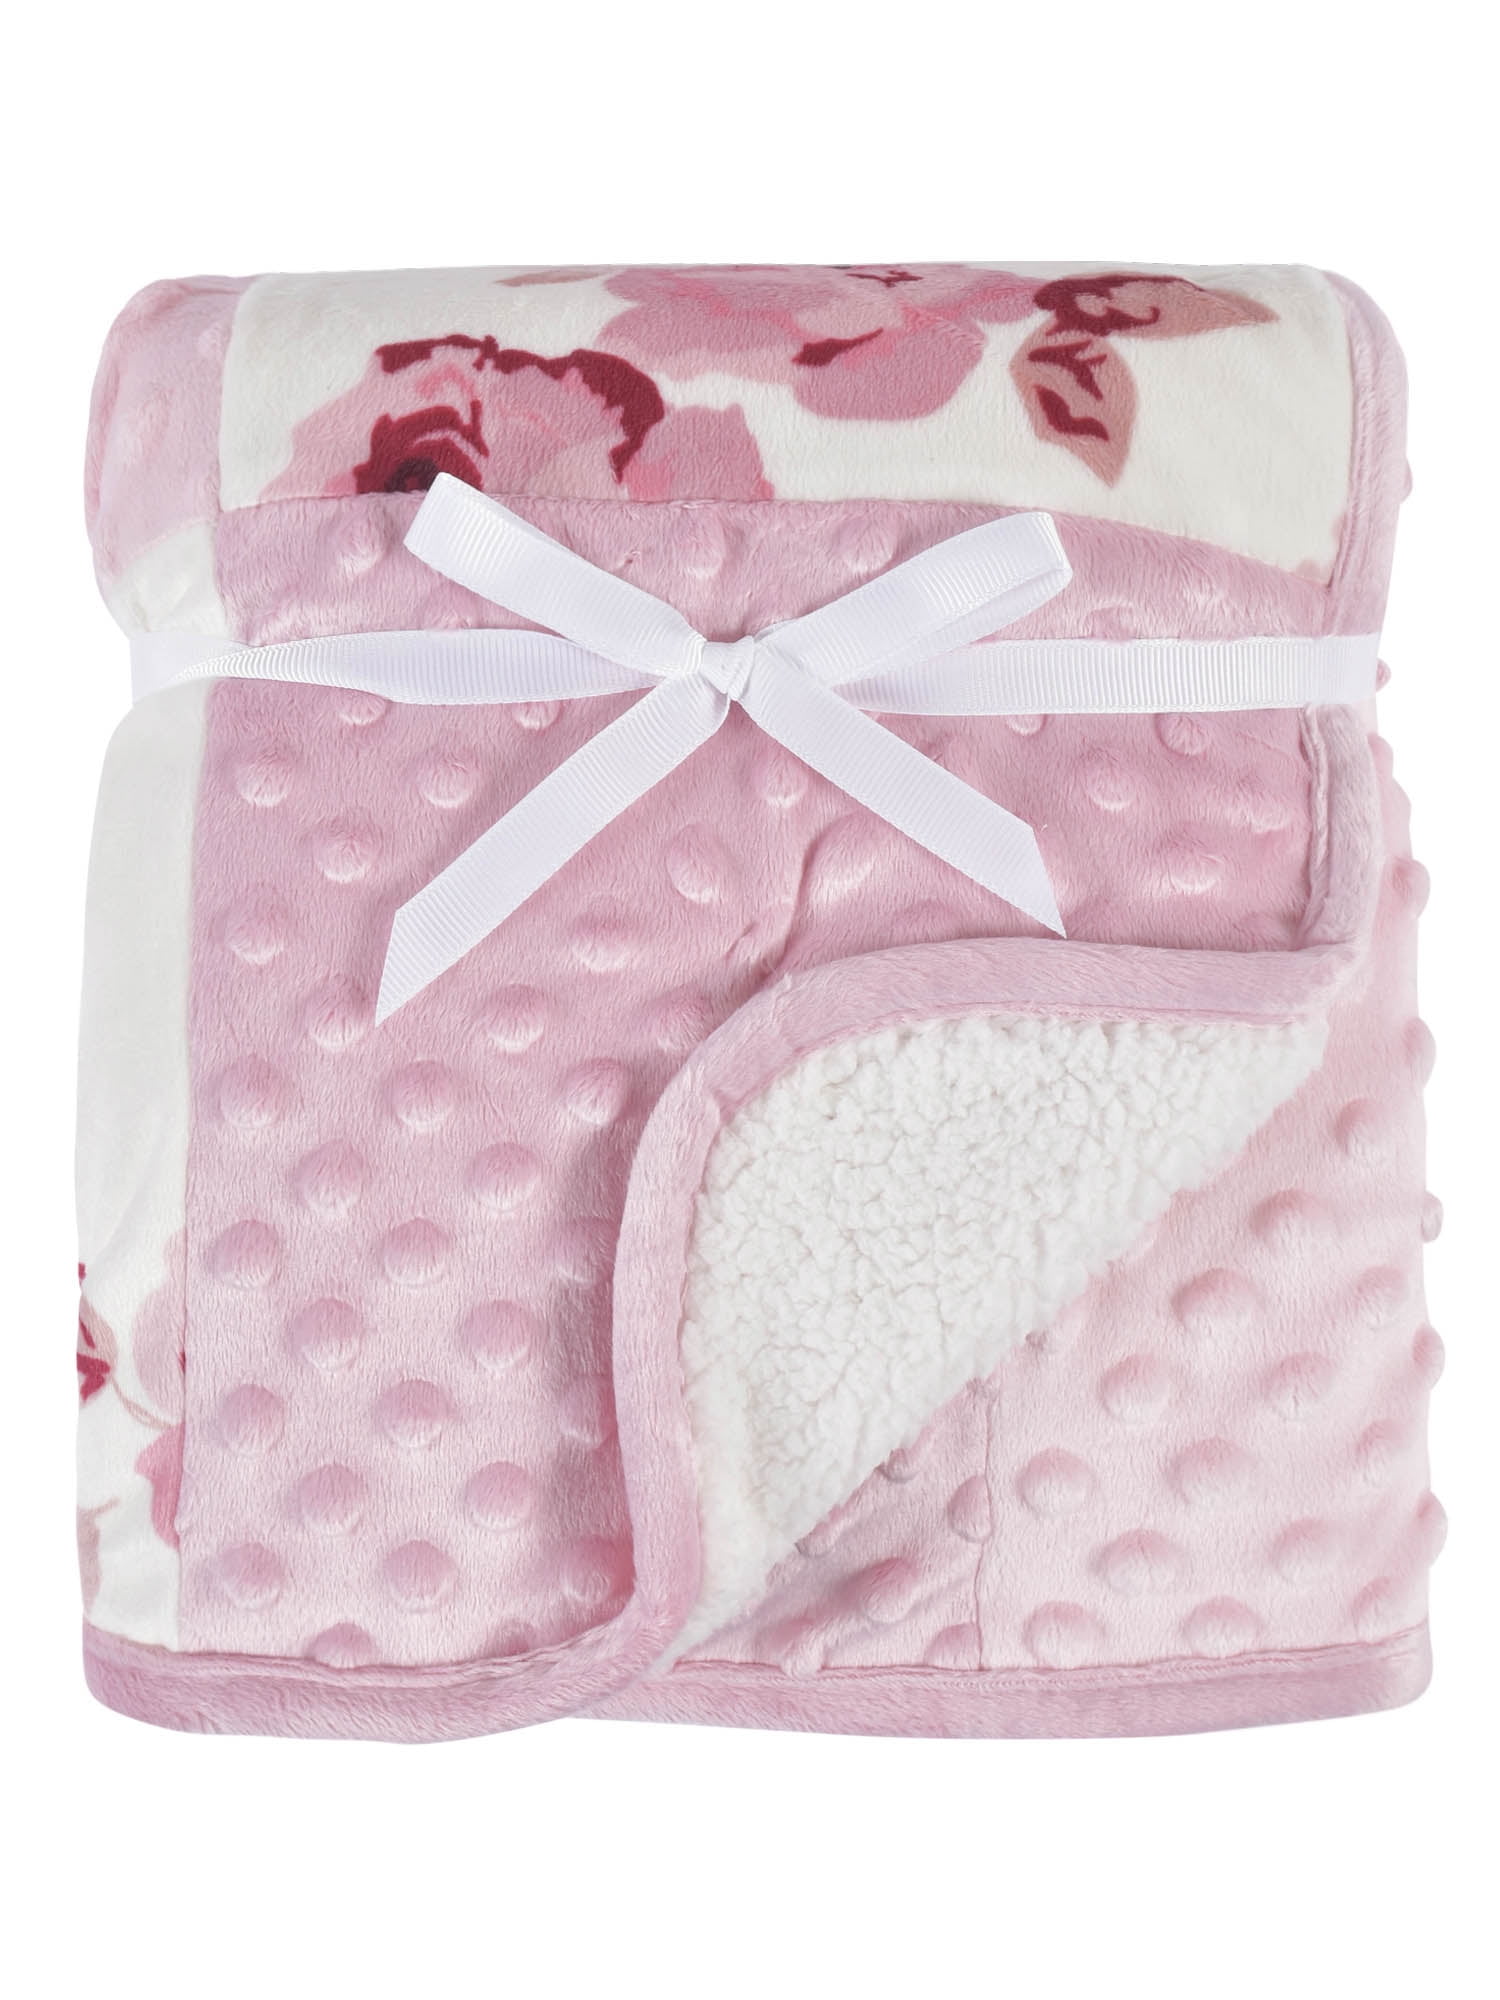 Personalised Embroidered Super Soft Baby Blanket Pink Cream Blue White Newborn 